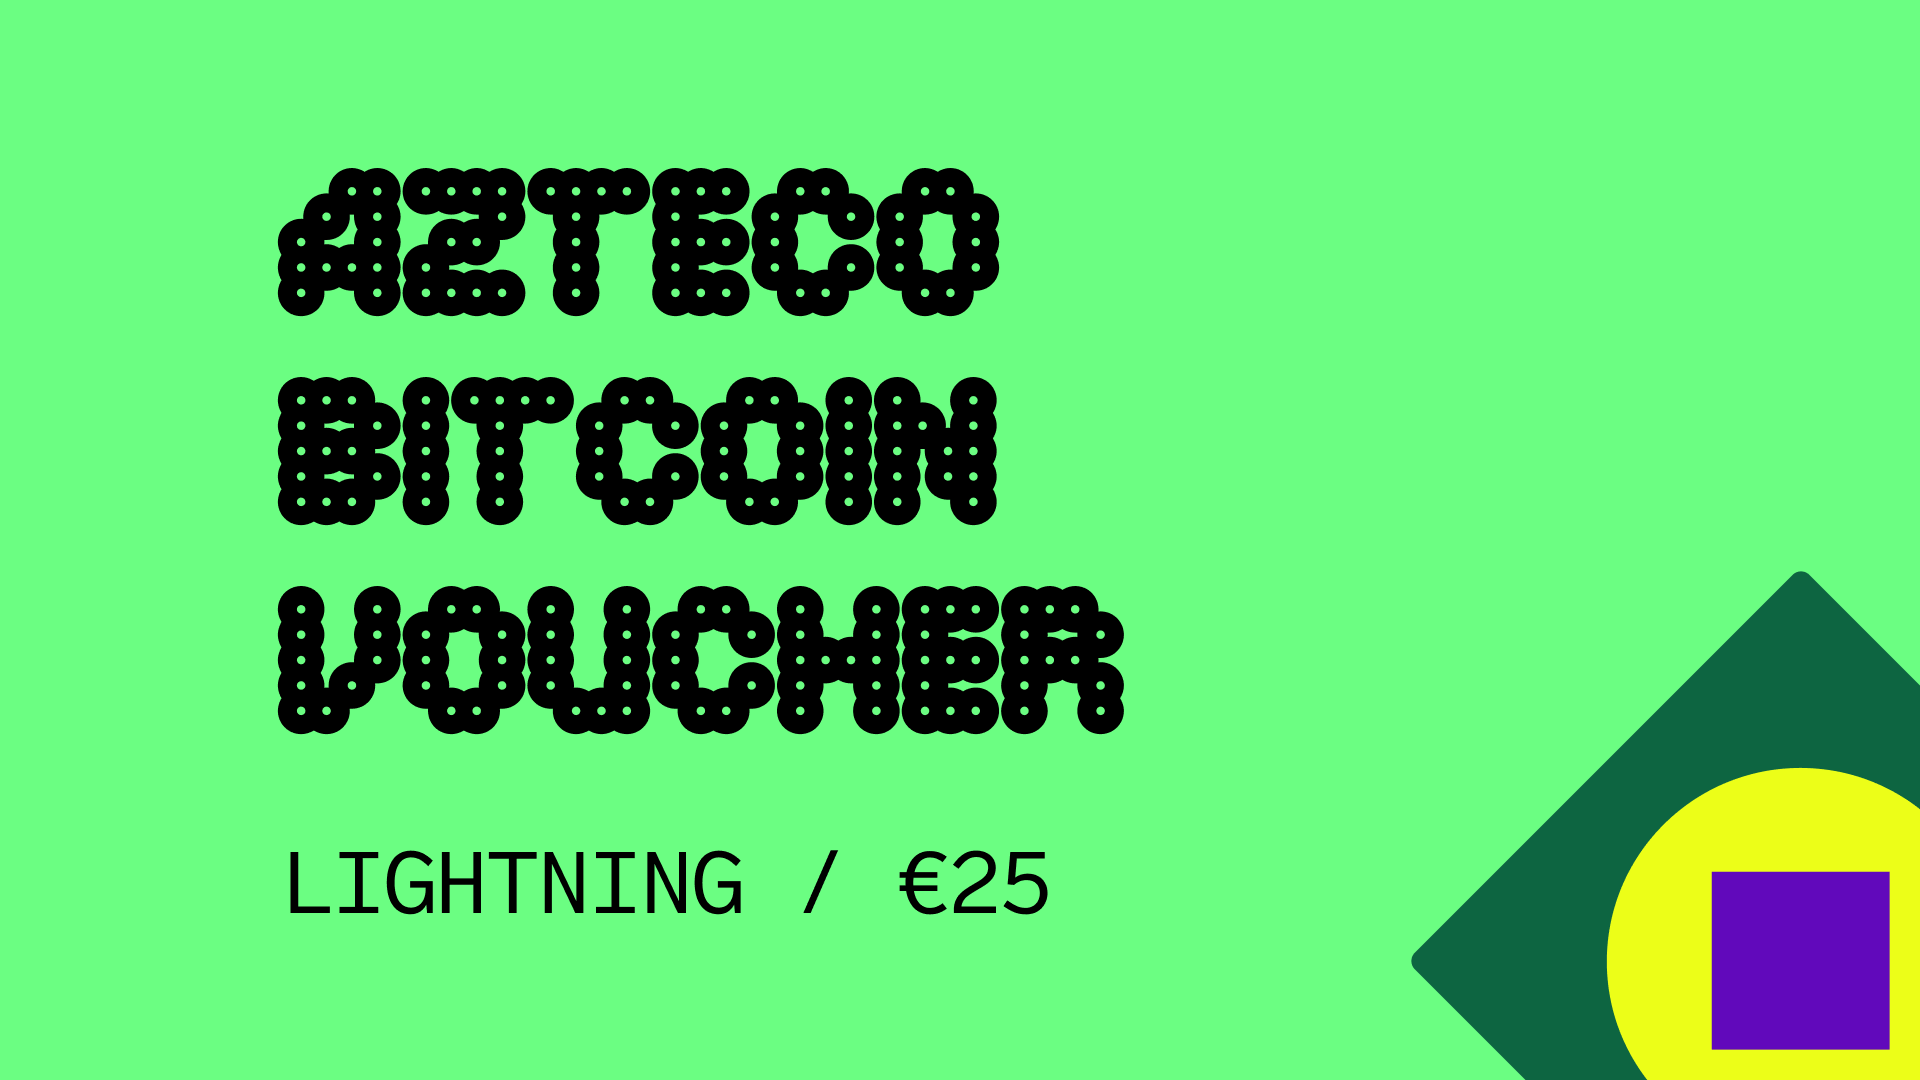 Azteco Bitcoin Lighting €25 Voucher, 28.25 usd